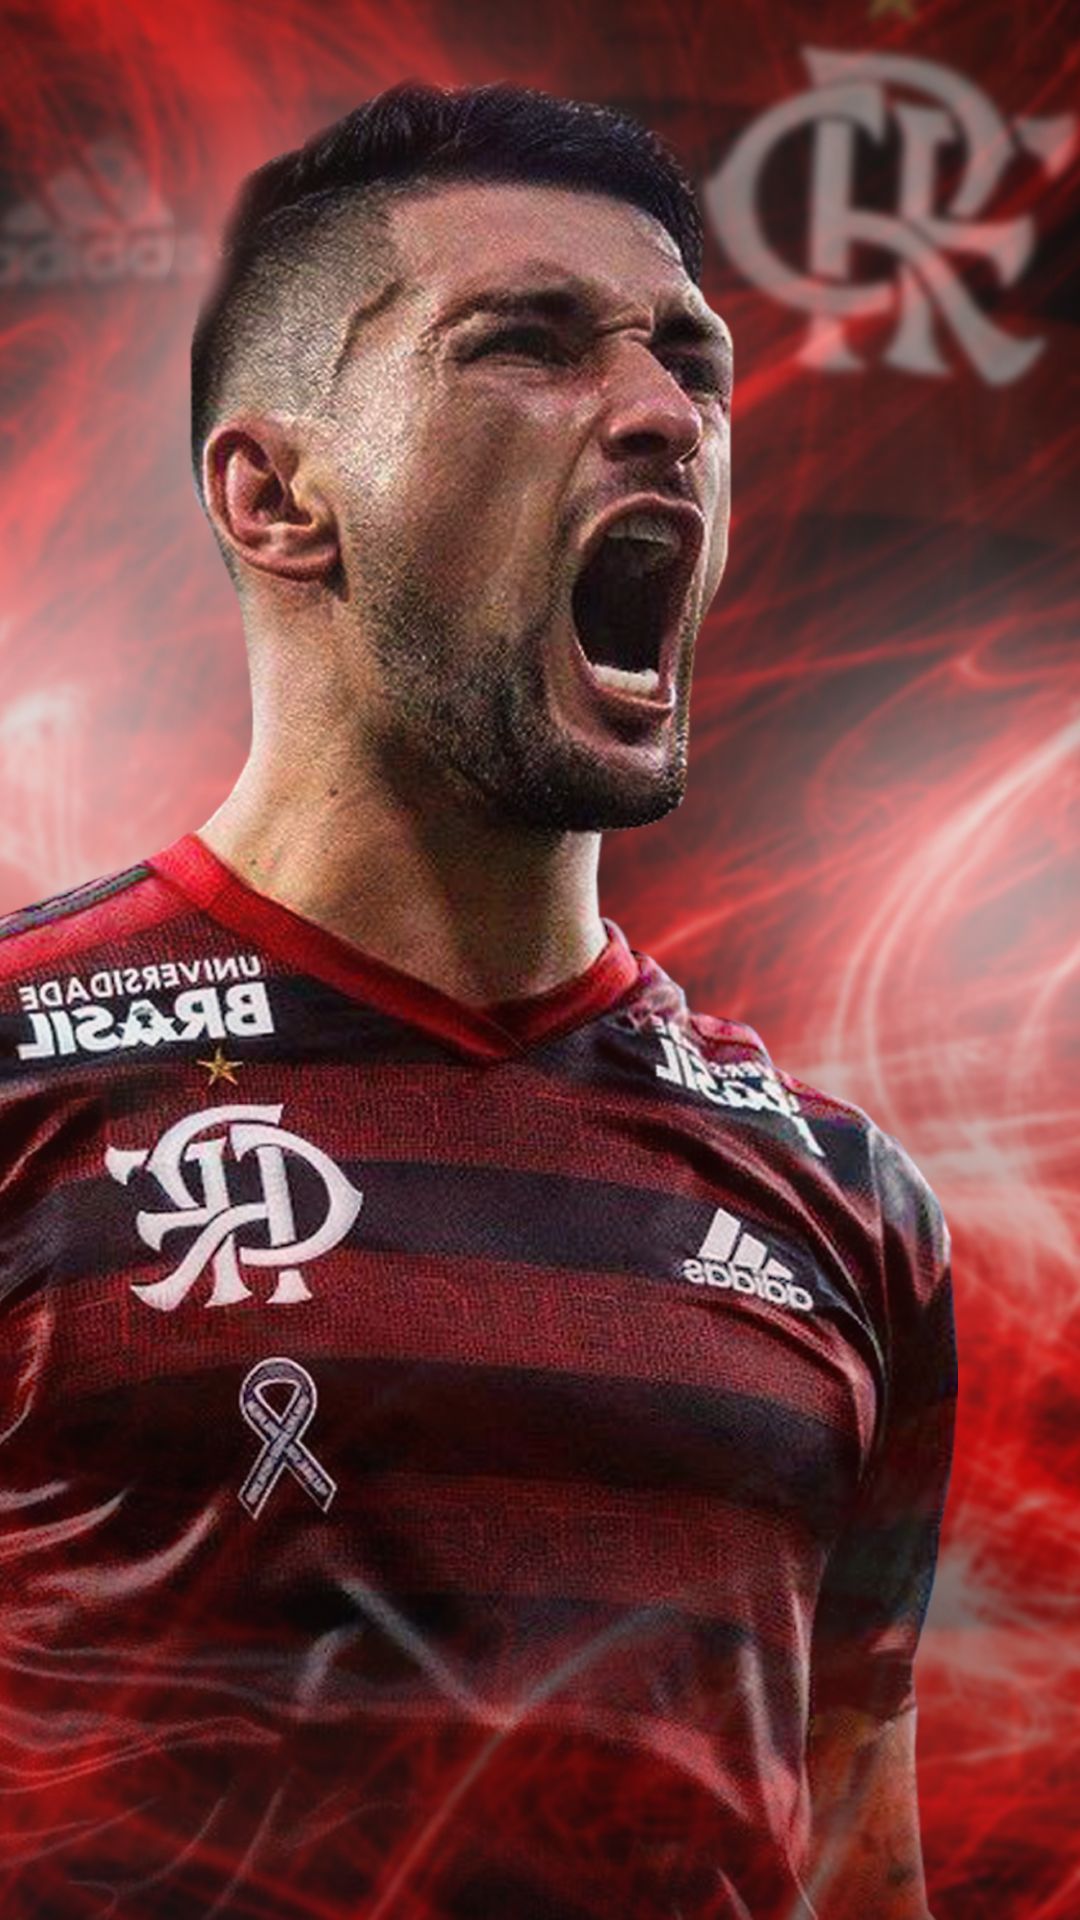 Arrascaeta Flamengo E Atl Tico Wallpaper